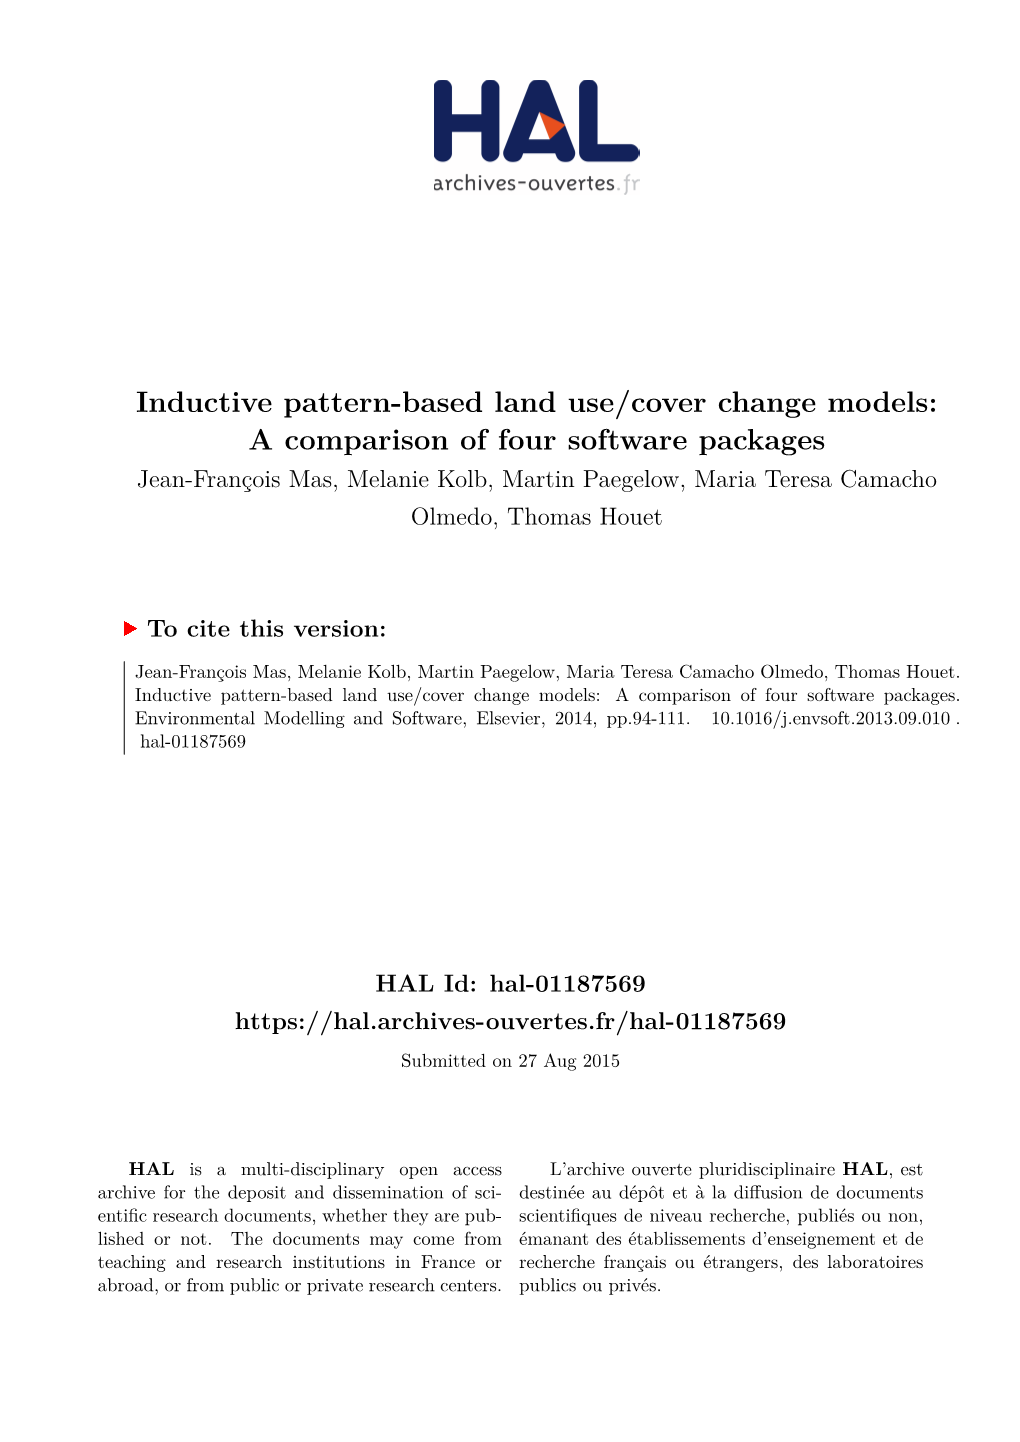 Inductive Pattern-Based Land Use/Cover Change Models